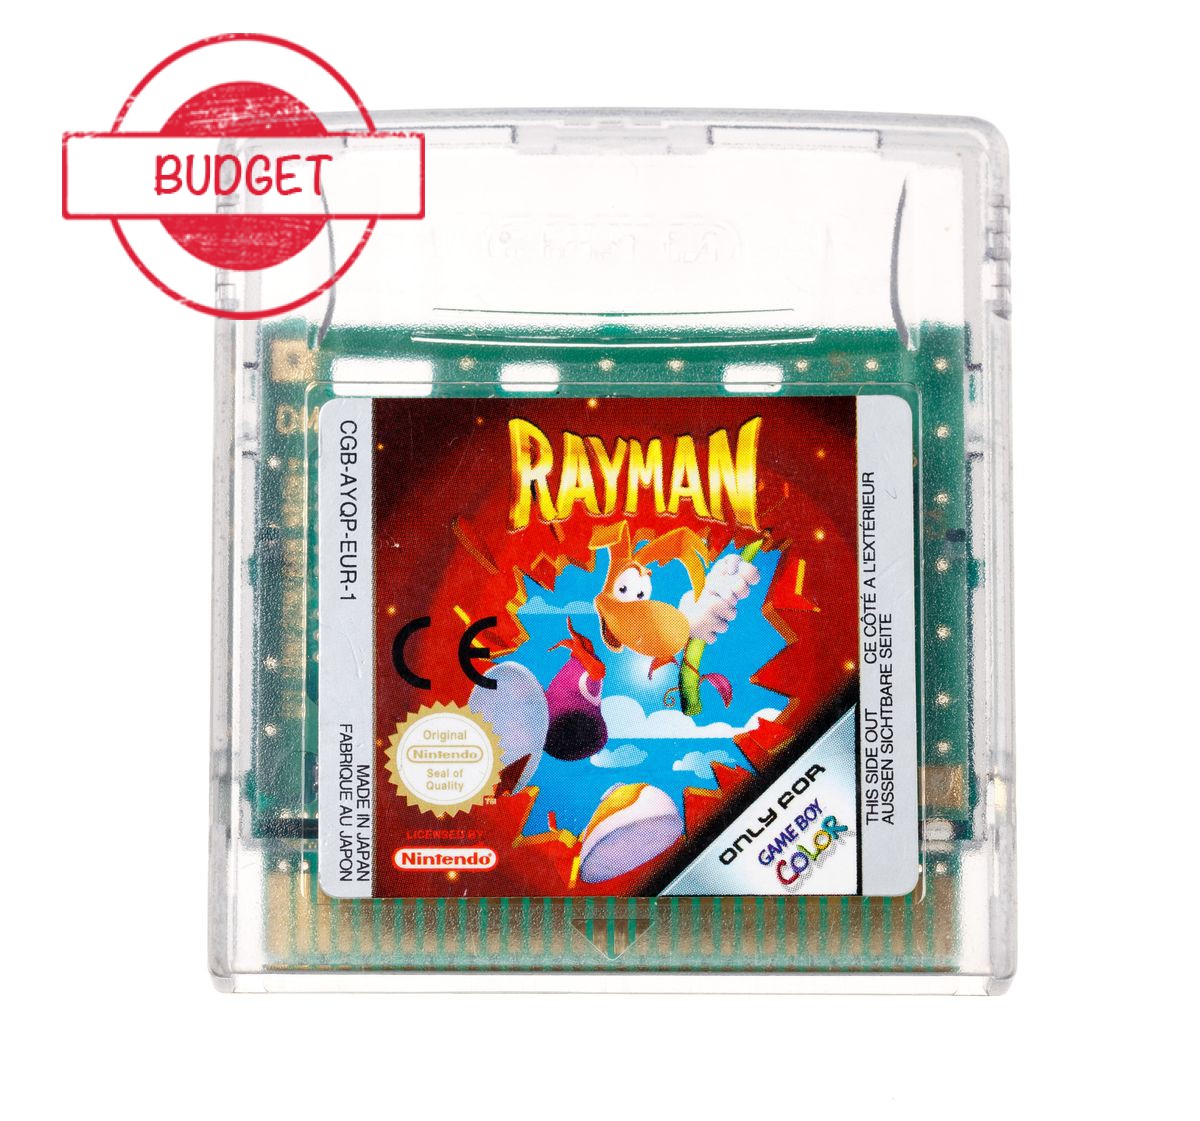 Rayman - Budget Kopen | Gameboy Color Games